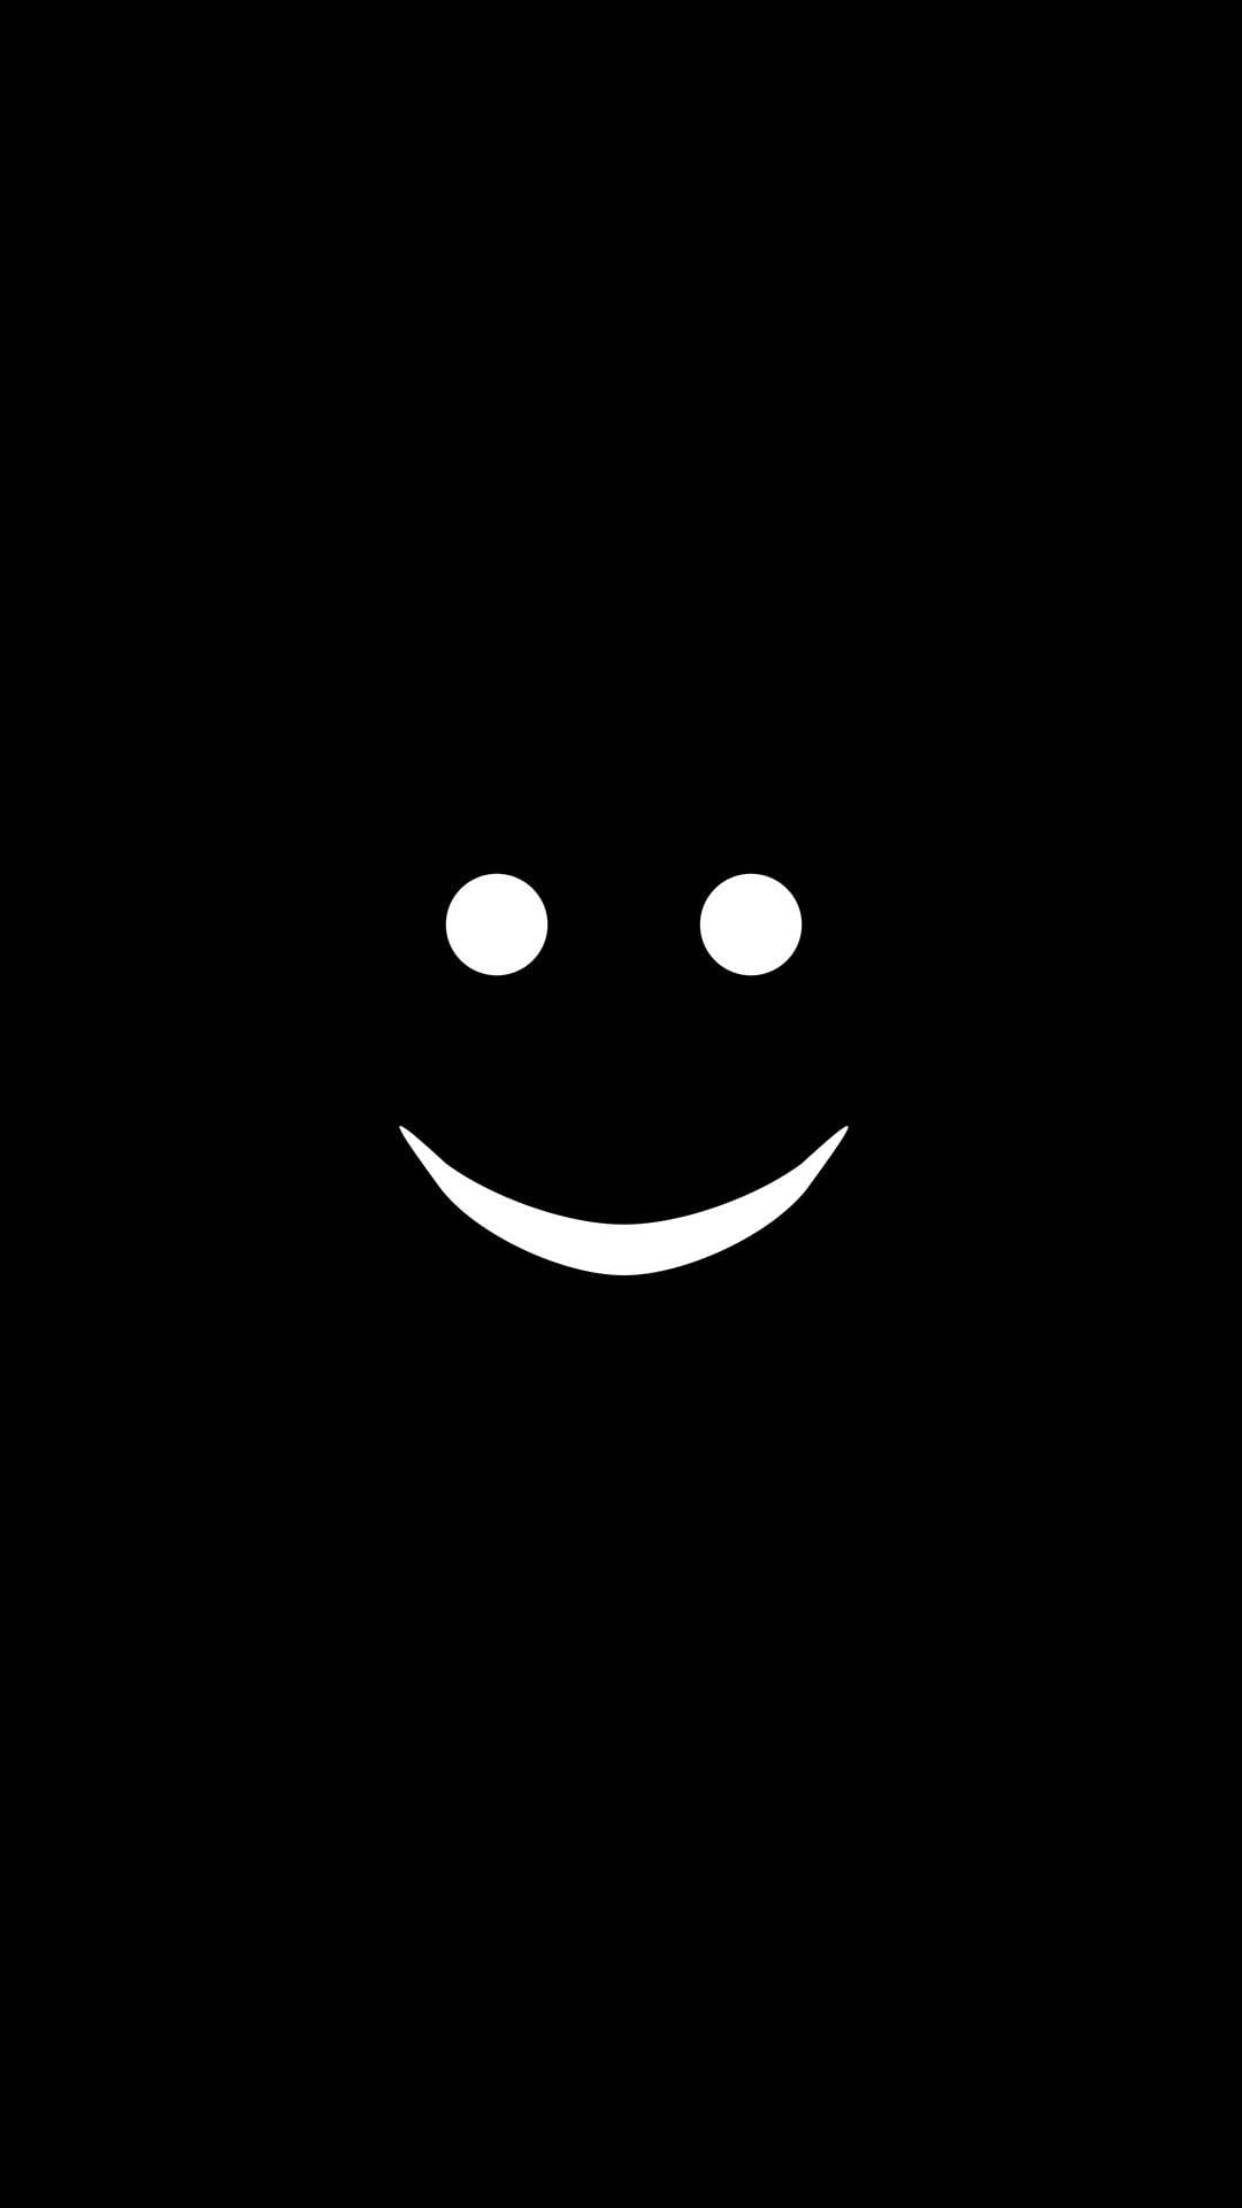 Smiley On Black Iphone 6 Plus Wallpaper